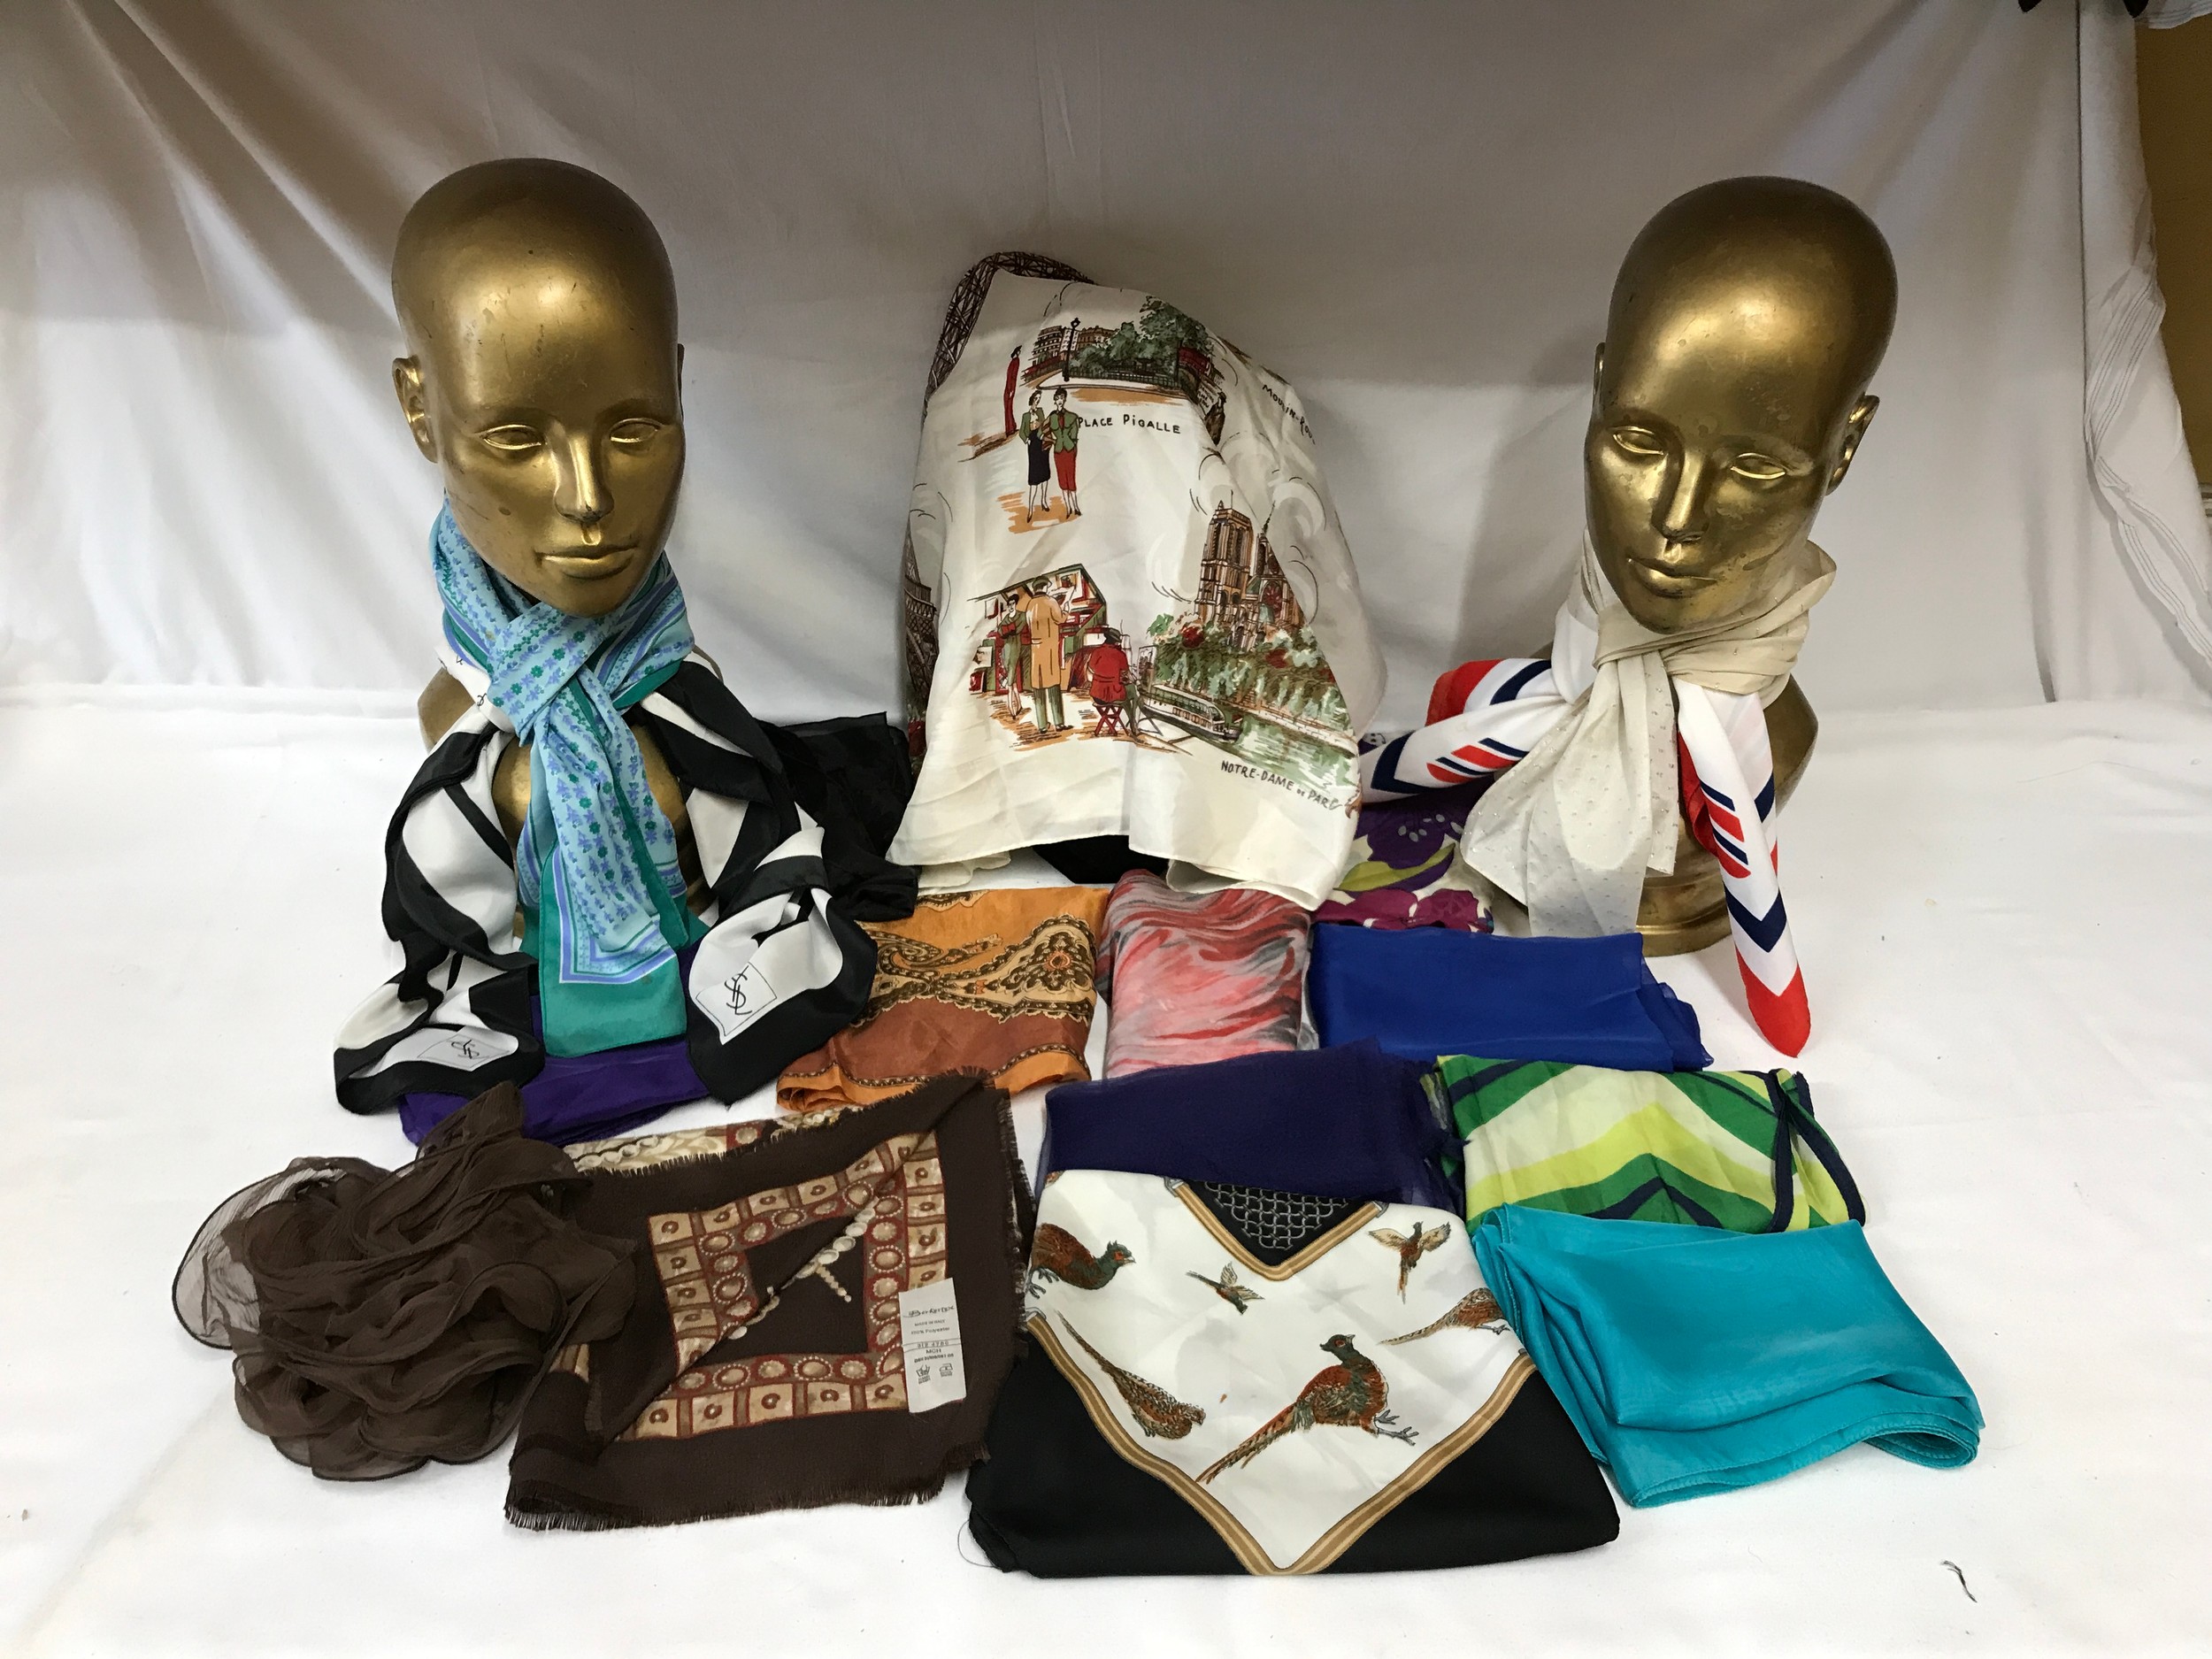 Seventeen head scarves one YSL, one Berkertex, one depicting Paris, one commemorating the Royal